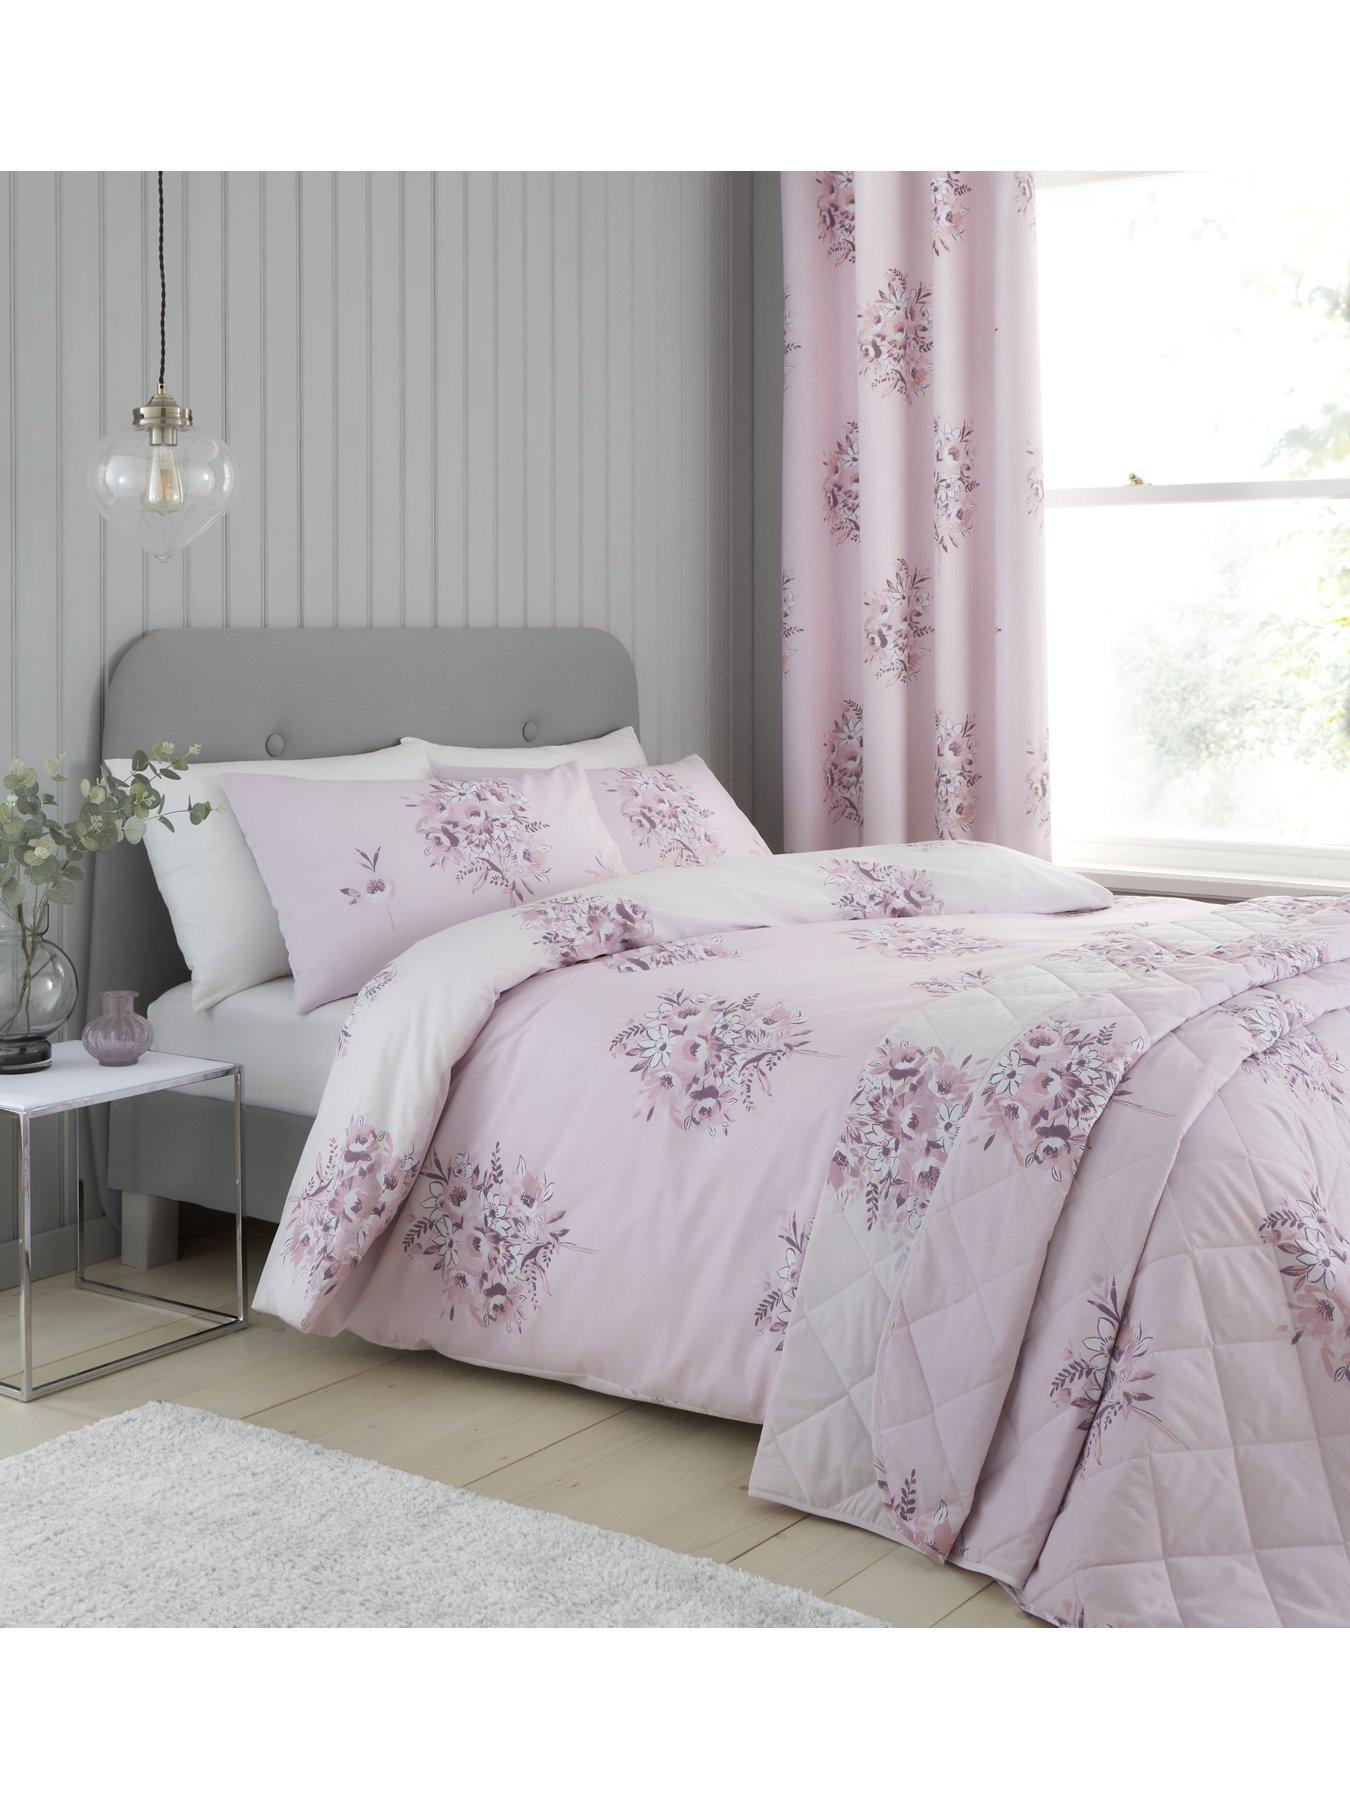 Details about   Duvet Set Reversible Art Deco Grey Bedding Pillows Curtains Catherine Lansfield 